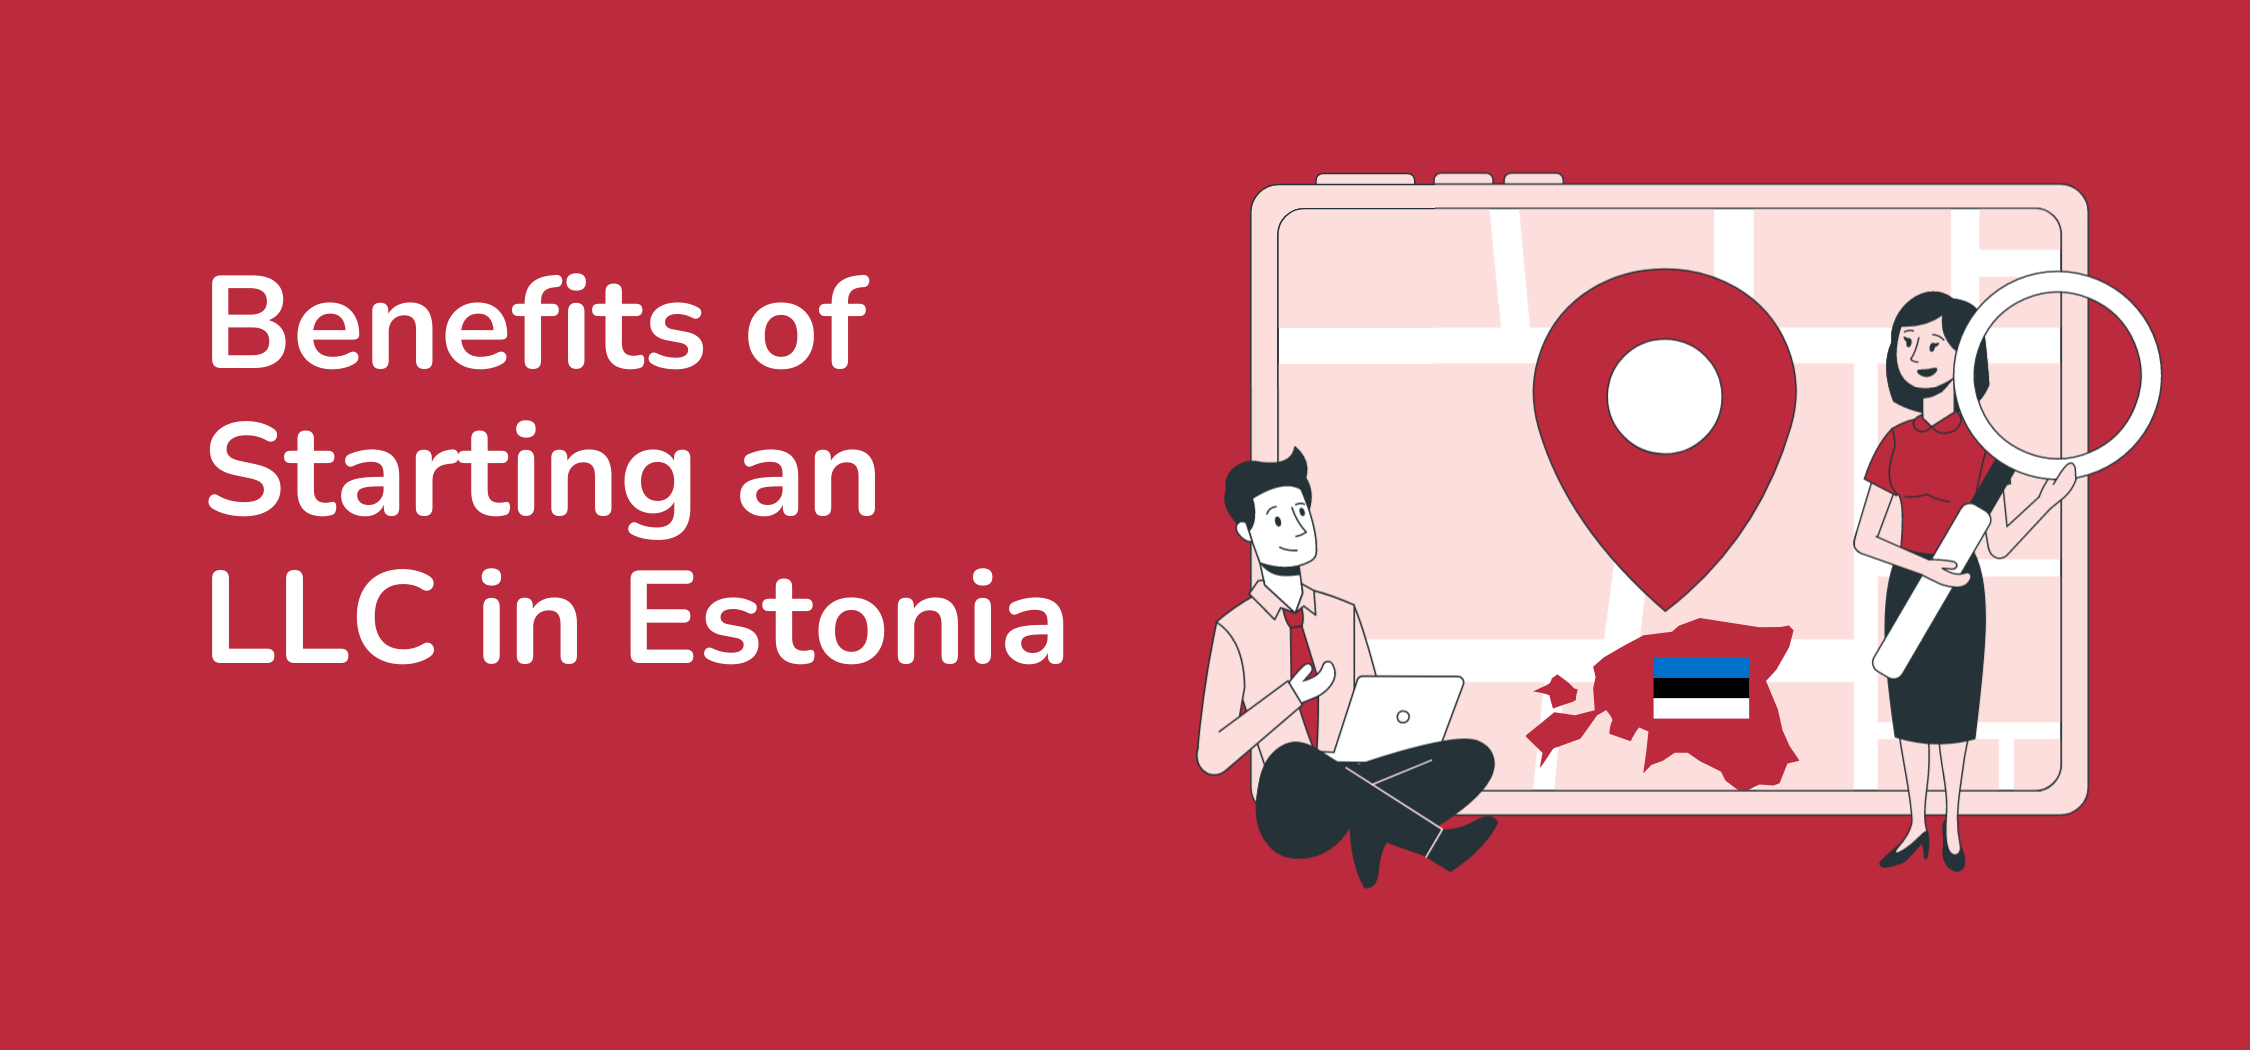 Benefits of Starting an LLC in Estonia